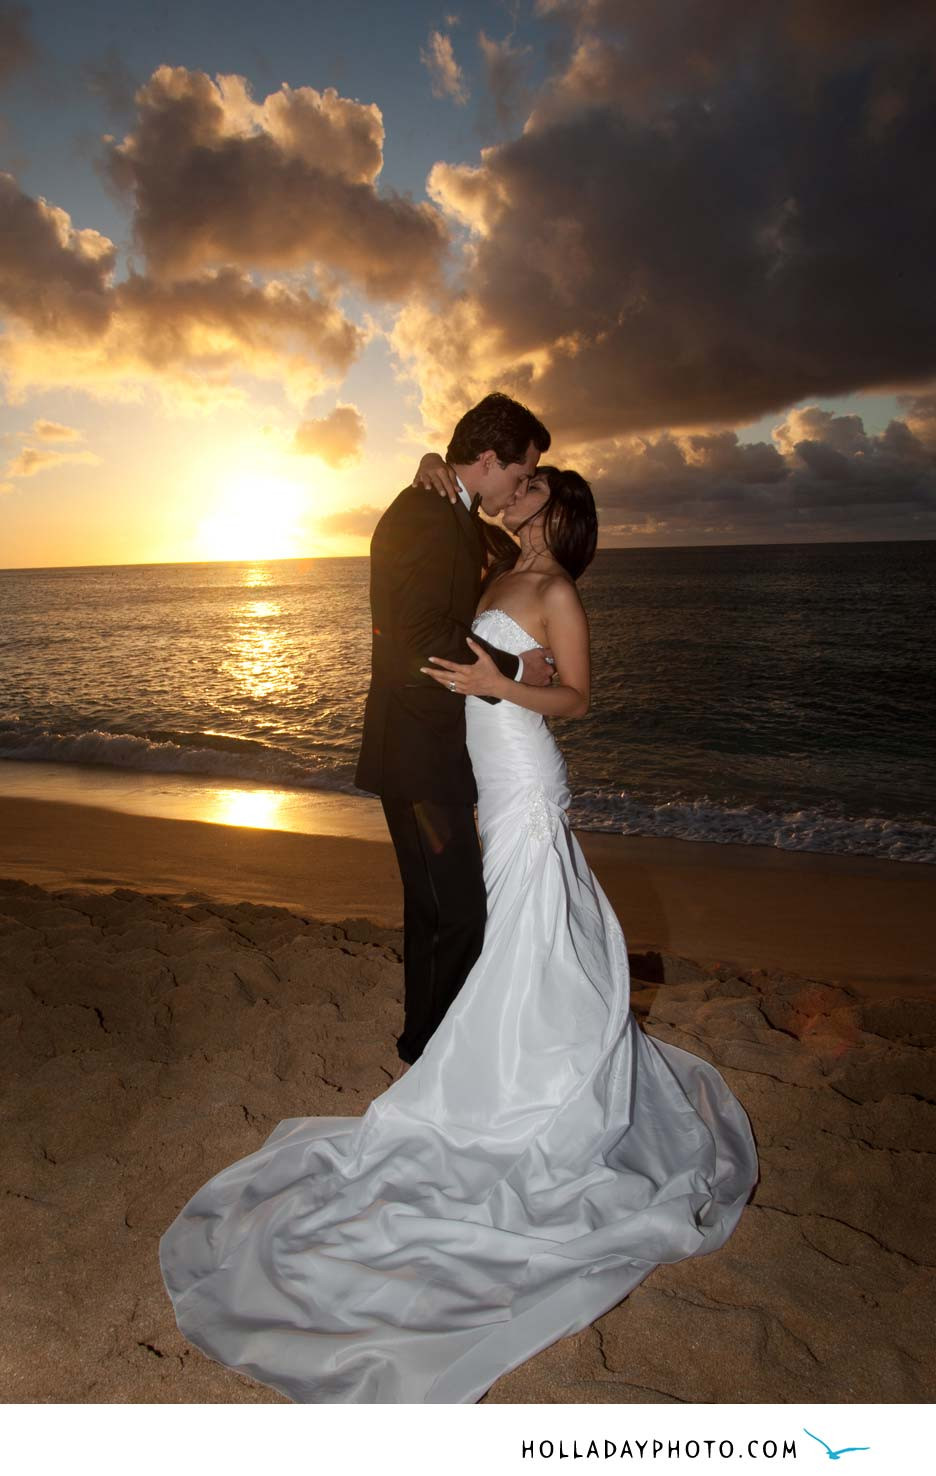 Sunset Beach Weddings
 ISABELLA & RYAN SUNSET BEACH WEDDING PHOTOGRAPHY – NORTH